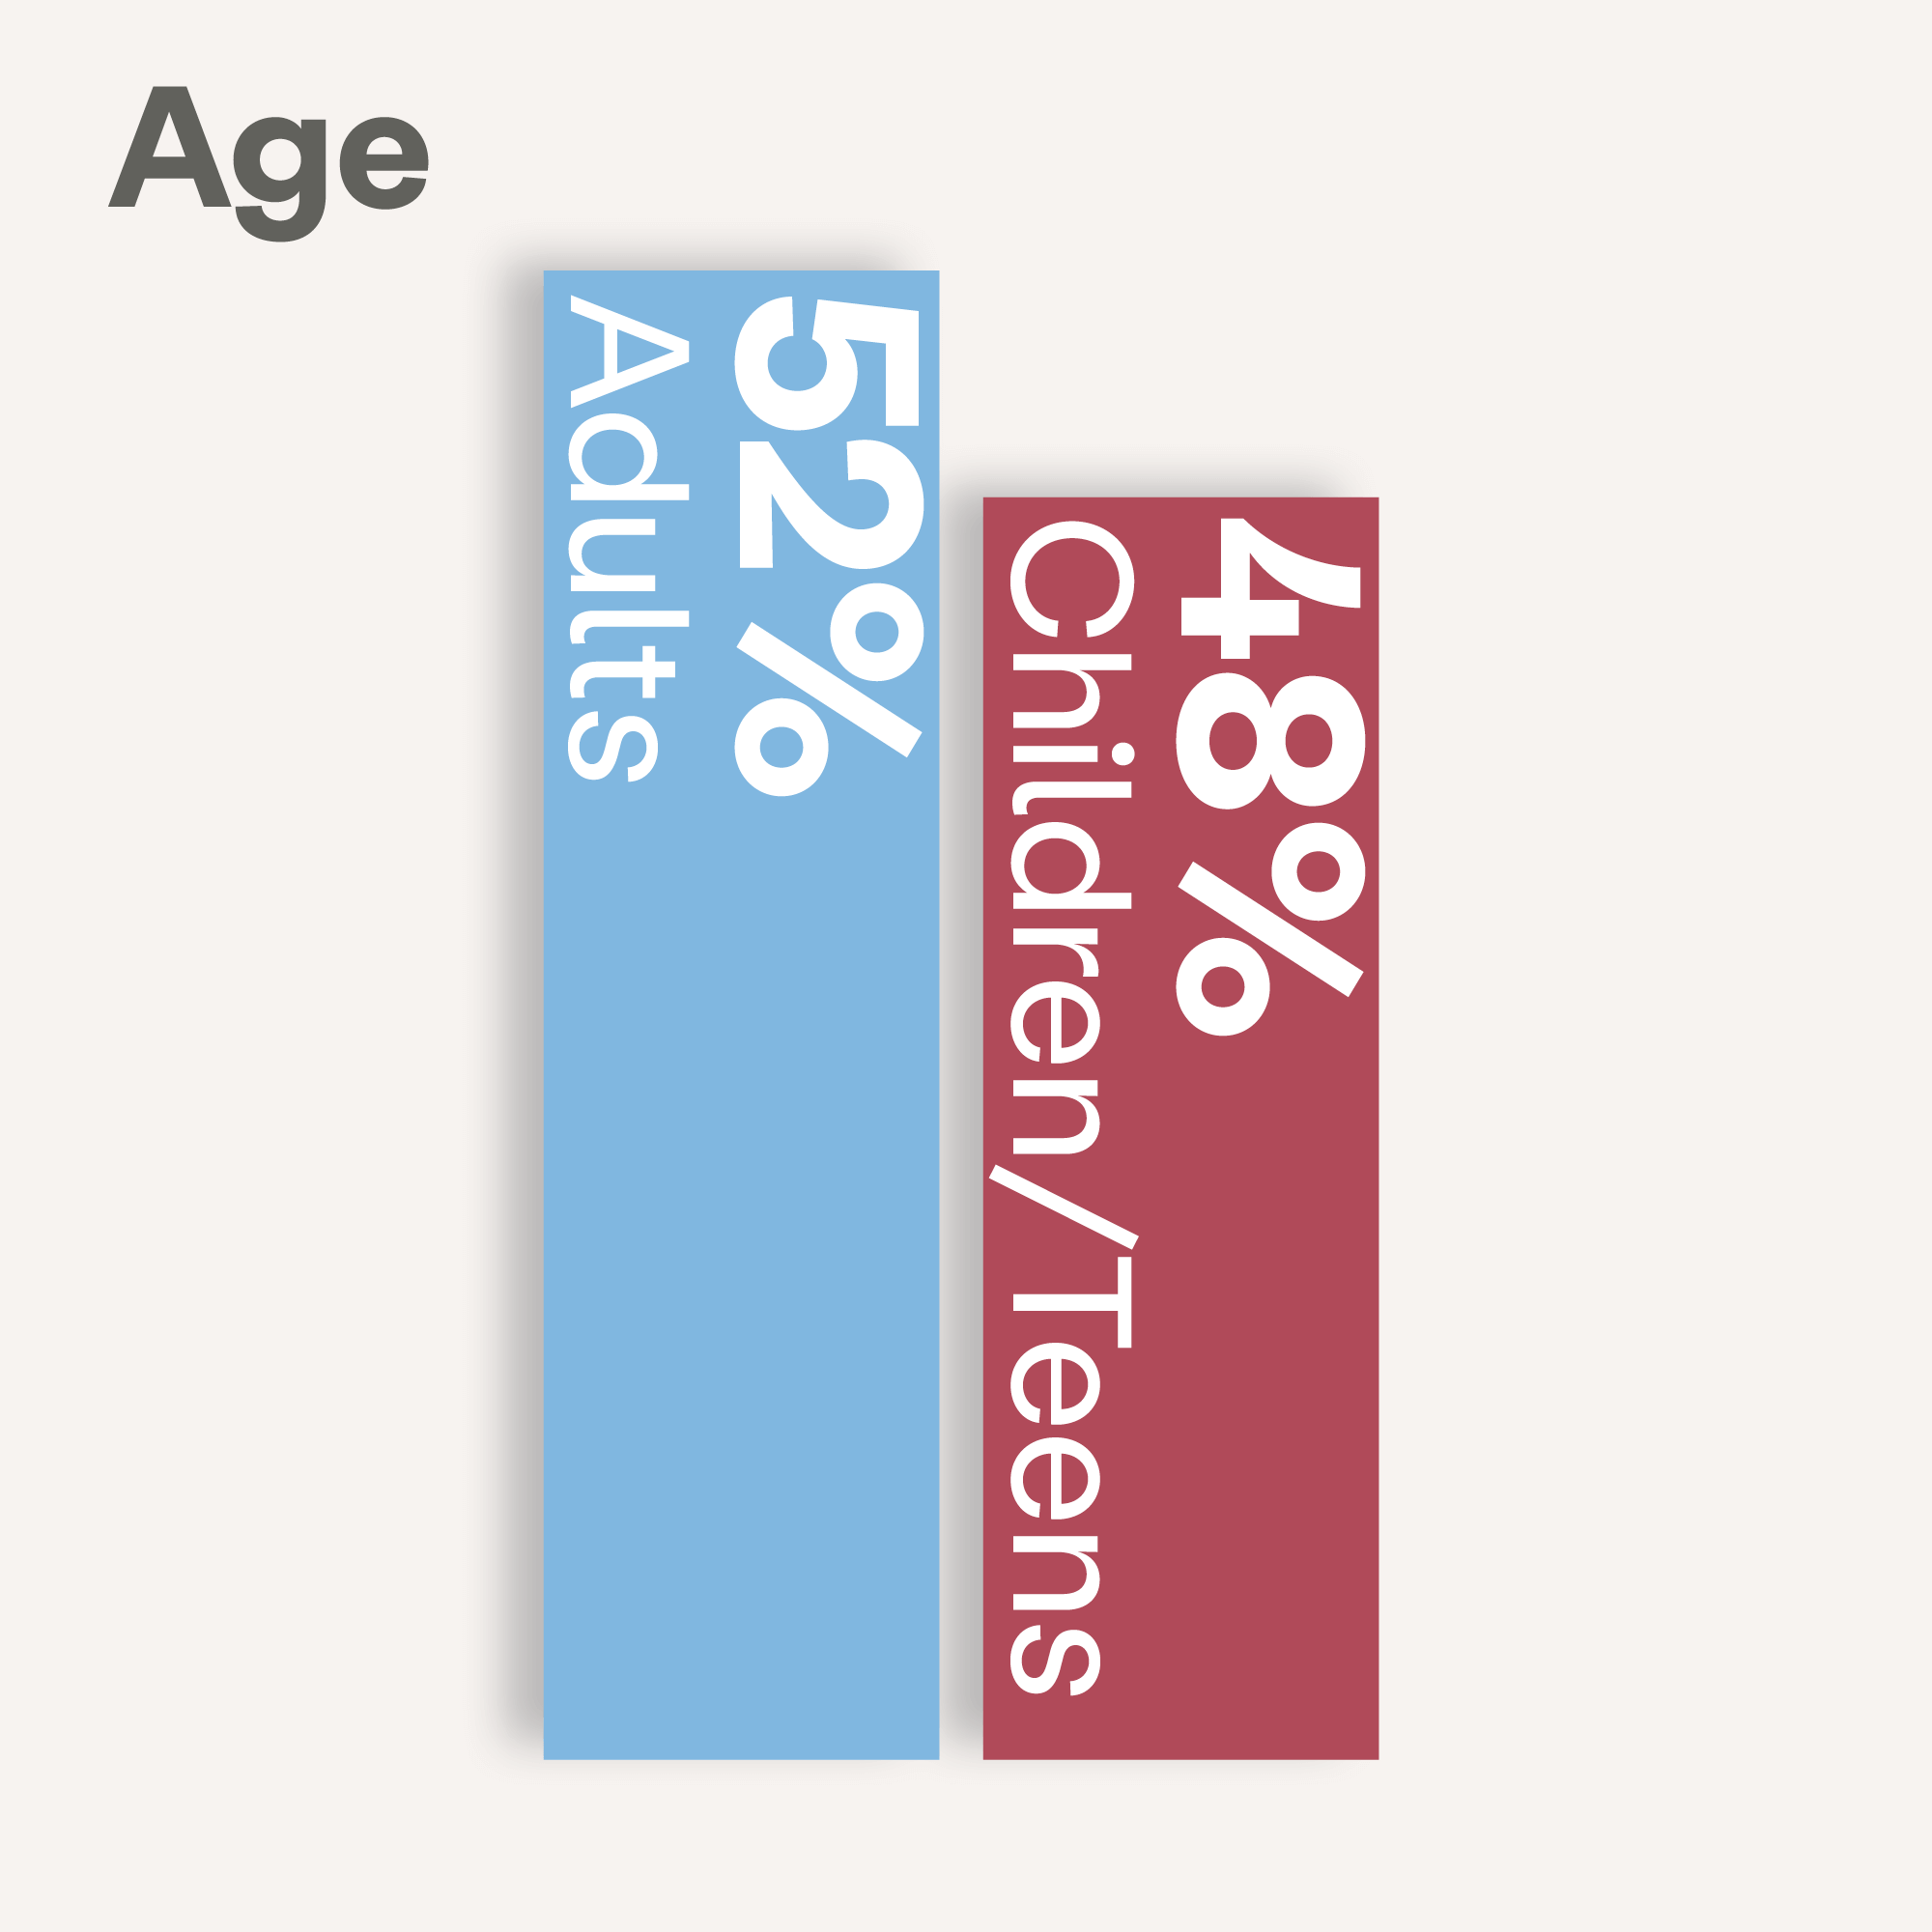 Adults vs children impact image